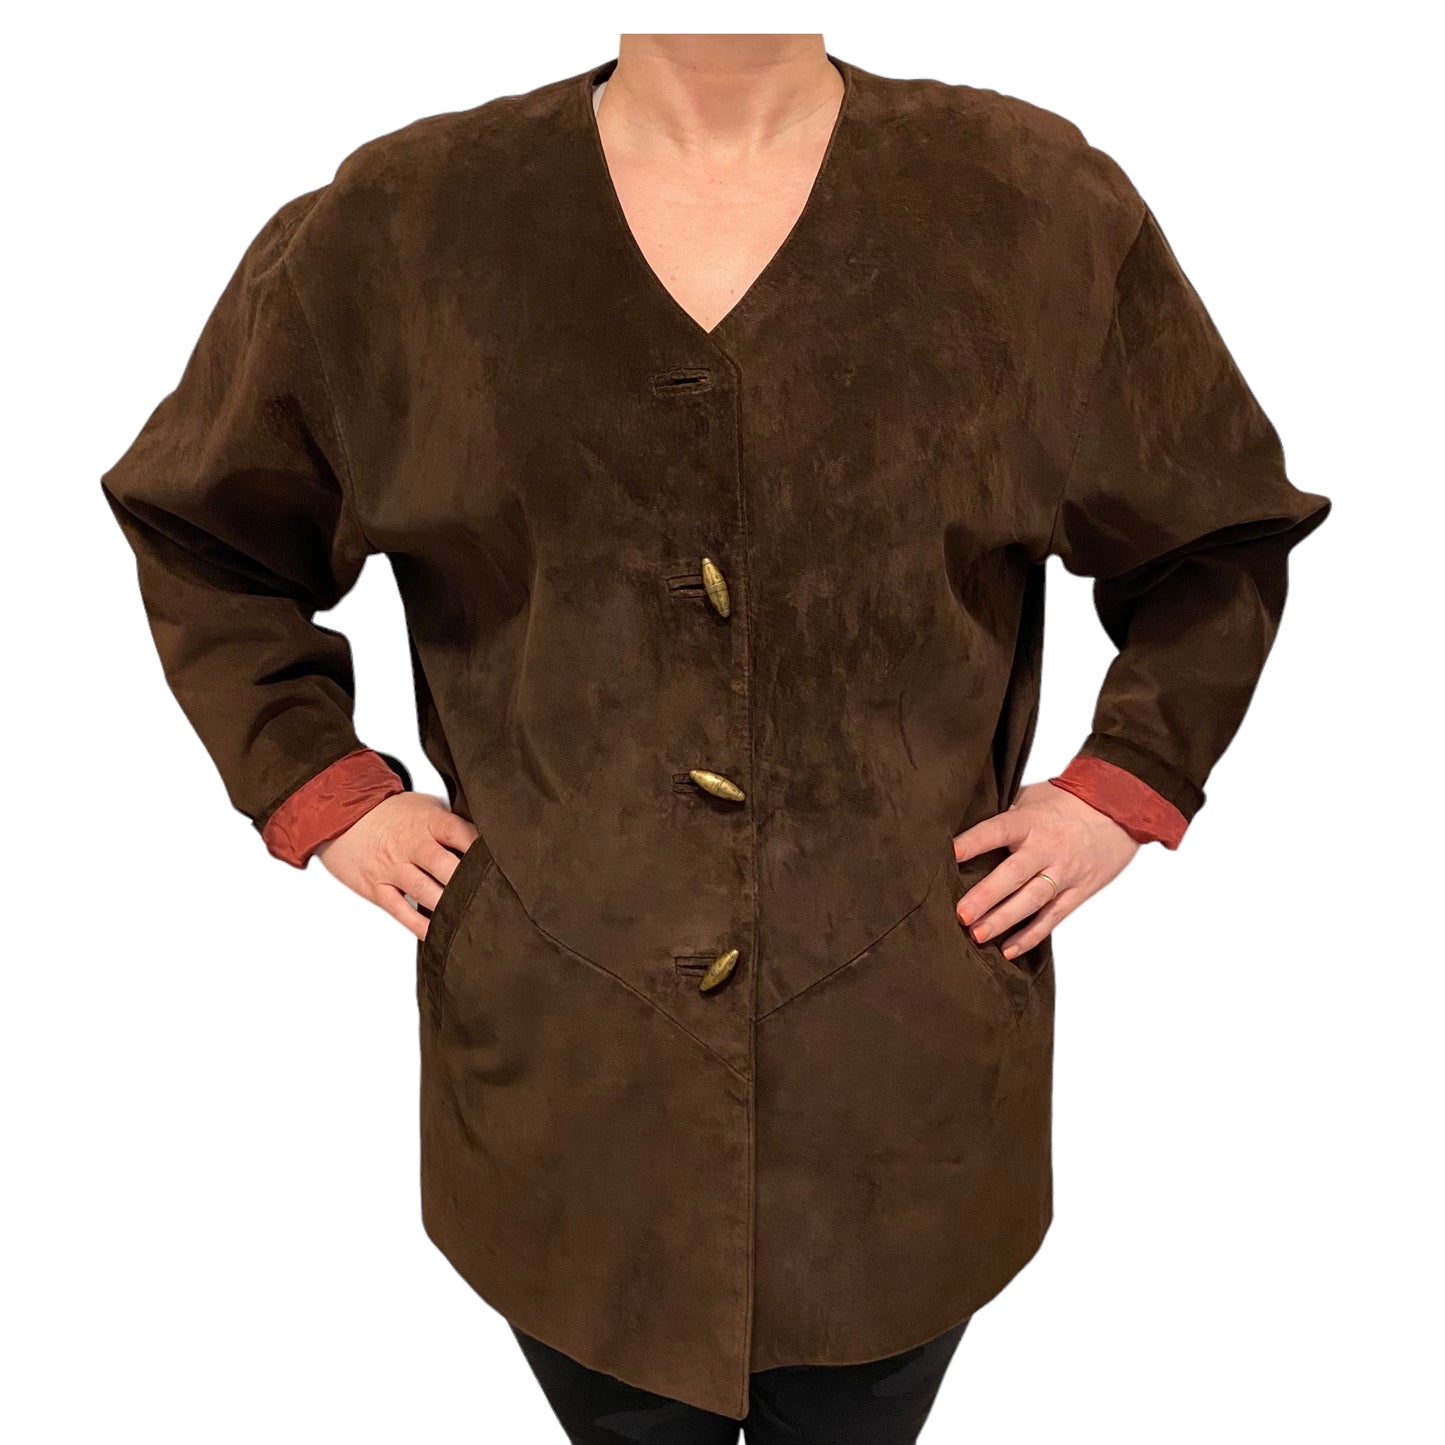 Stunning Vintage Brown Suede Leather Collarless Long Jacket Coat Size Large